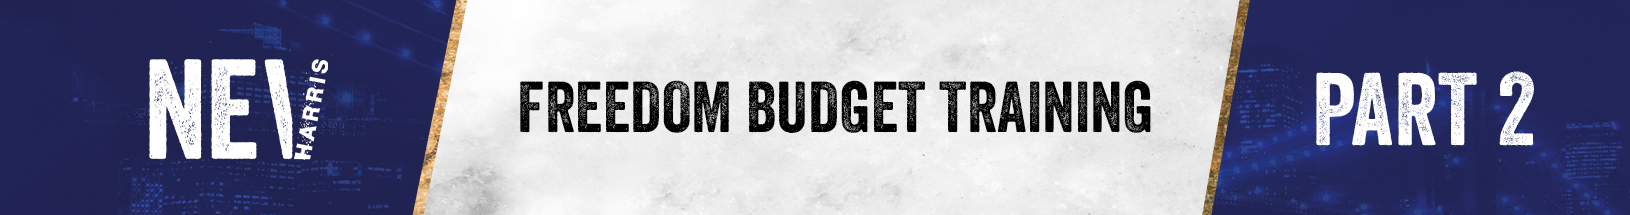 Freedom Budget Training Part 2.1